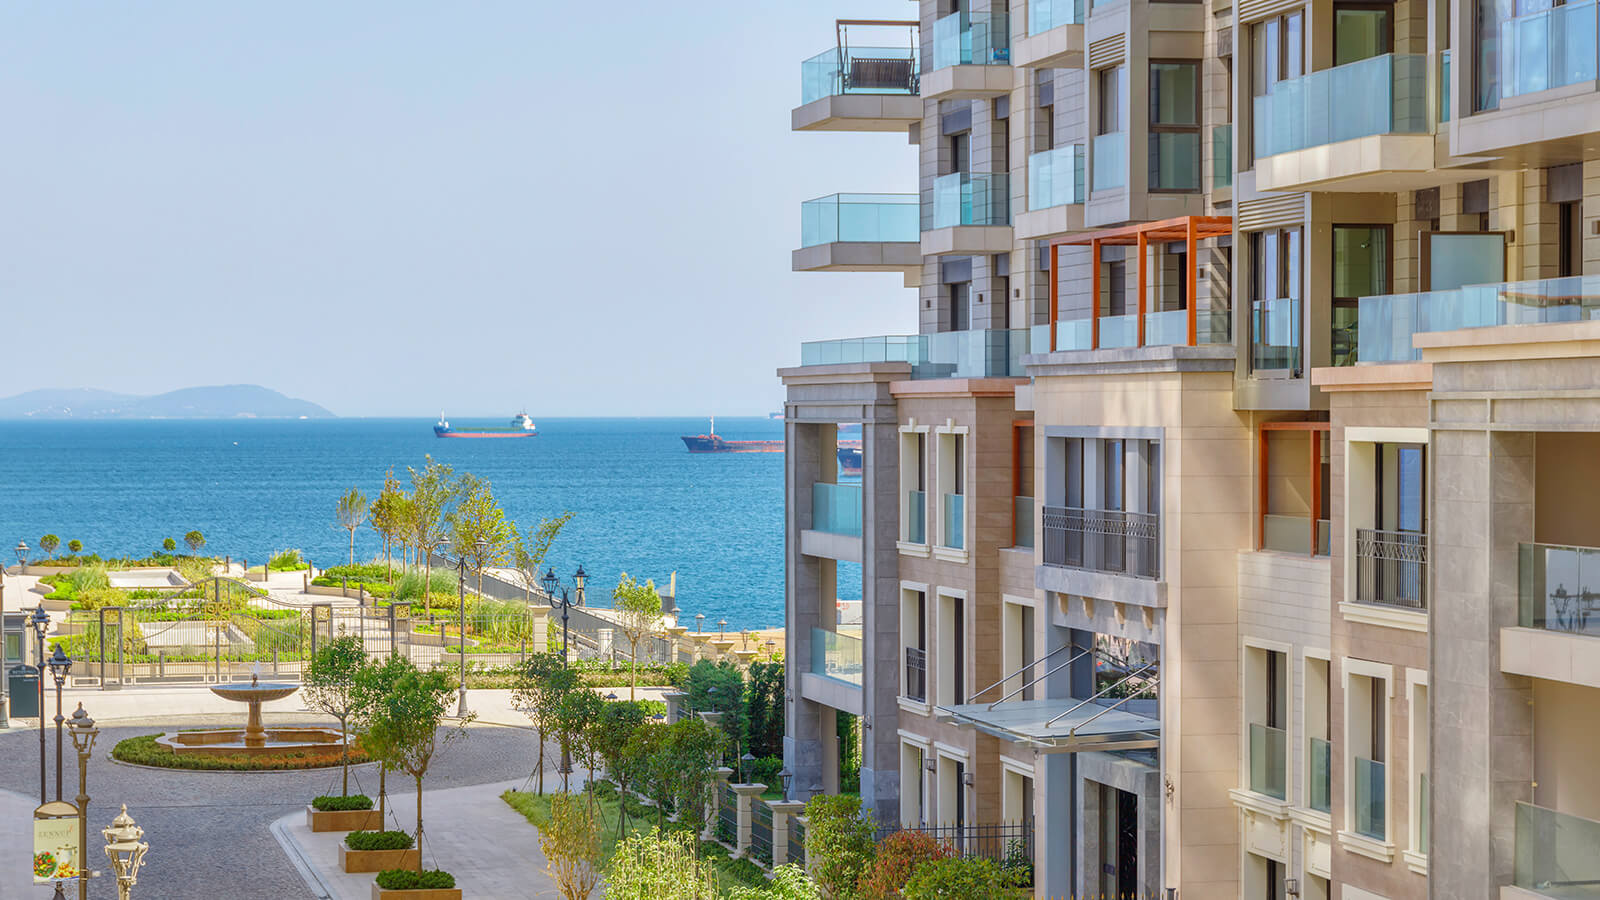 Waterfront Residential Units on the Coastal Line of Zeytinburnu – Modern Revolutionary Architecture